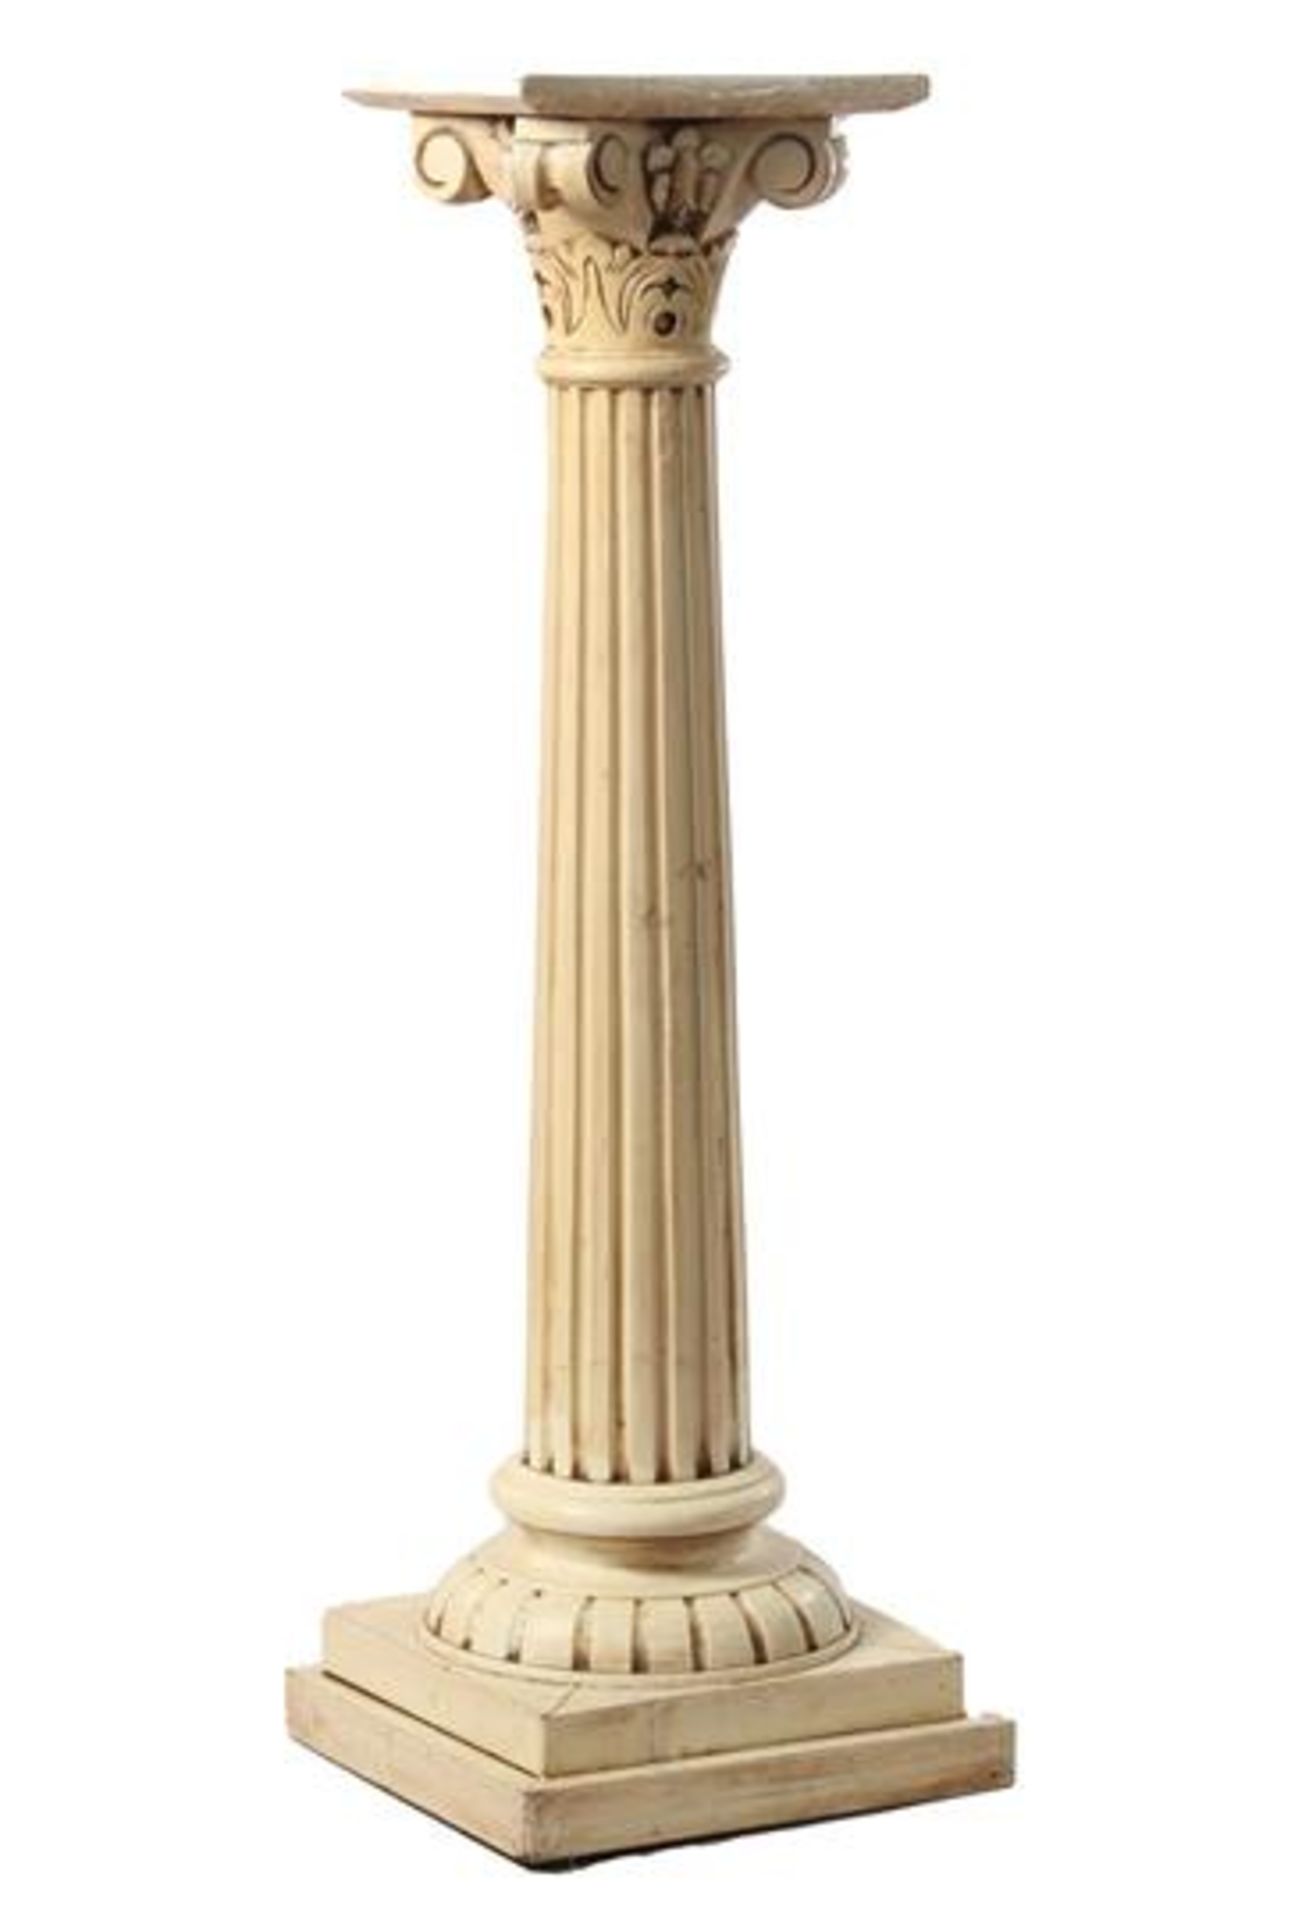 White lacquered wooden pedestal 116 cm high, base 37.5x37.5 cm, top 30x30 cm